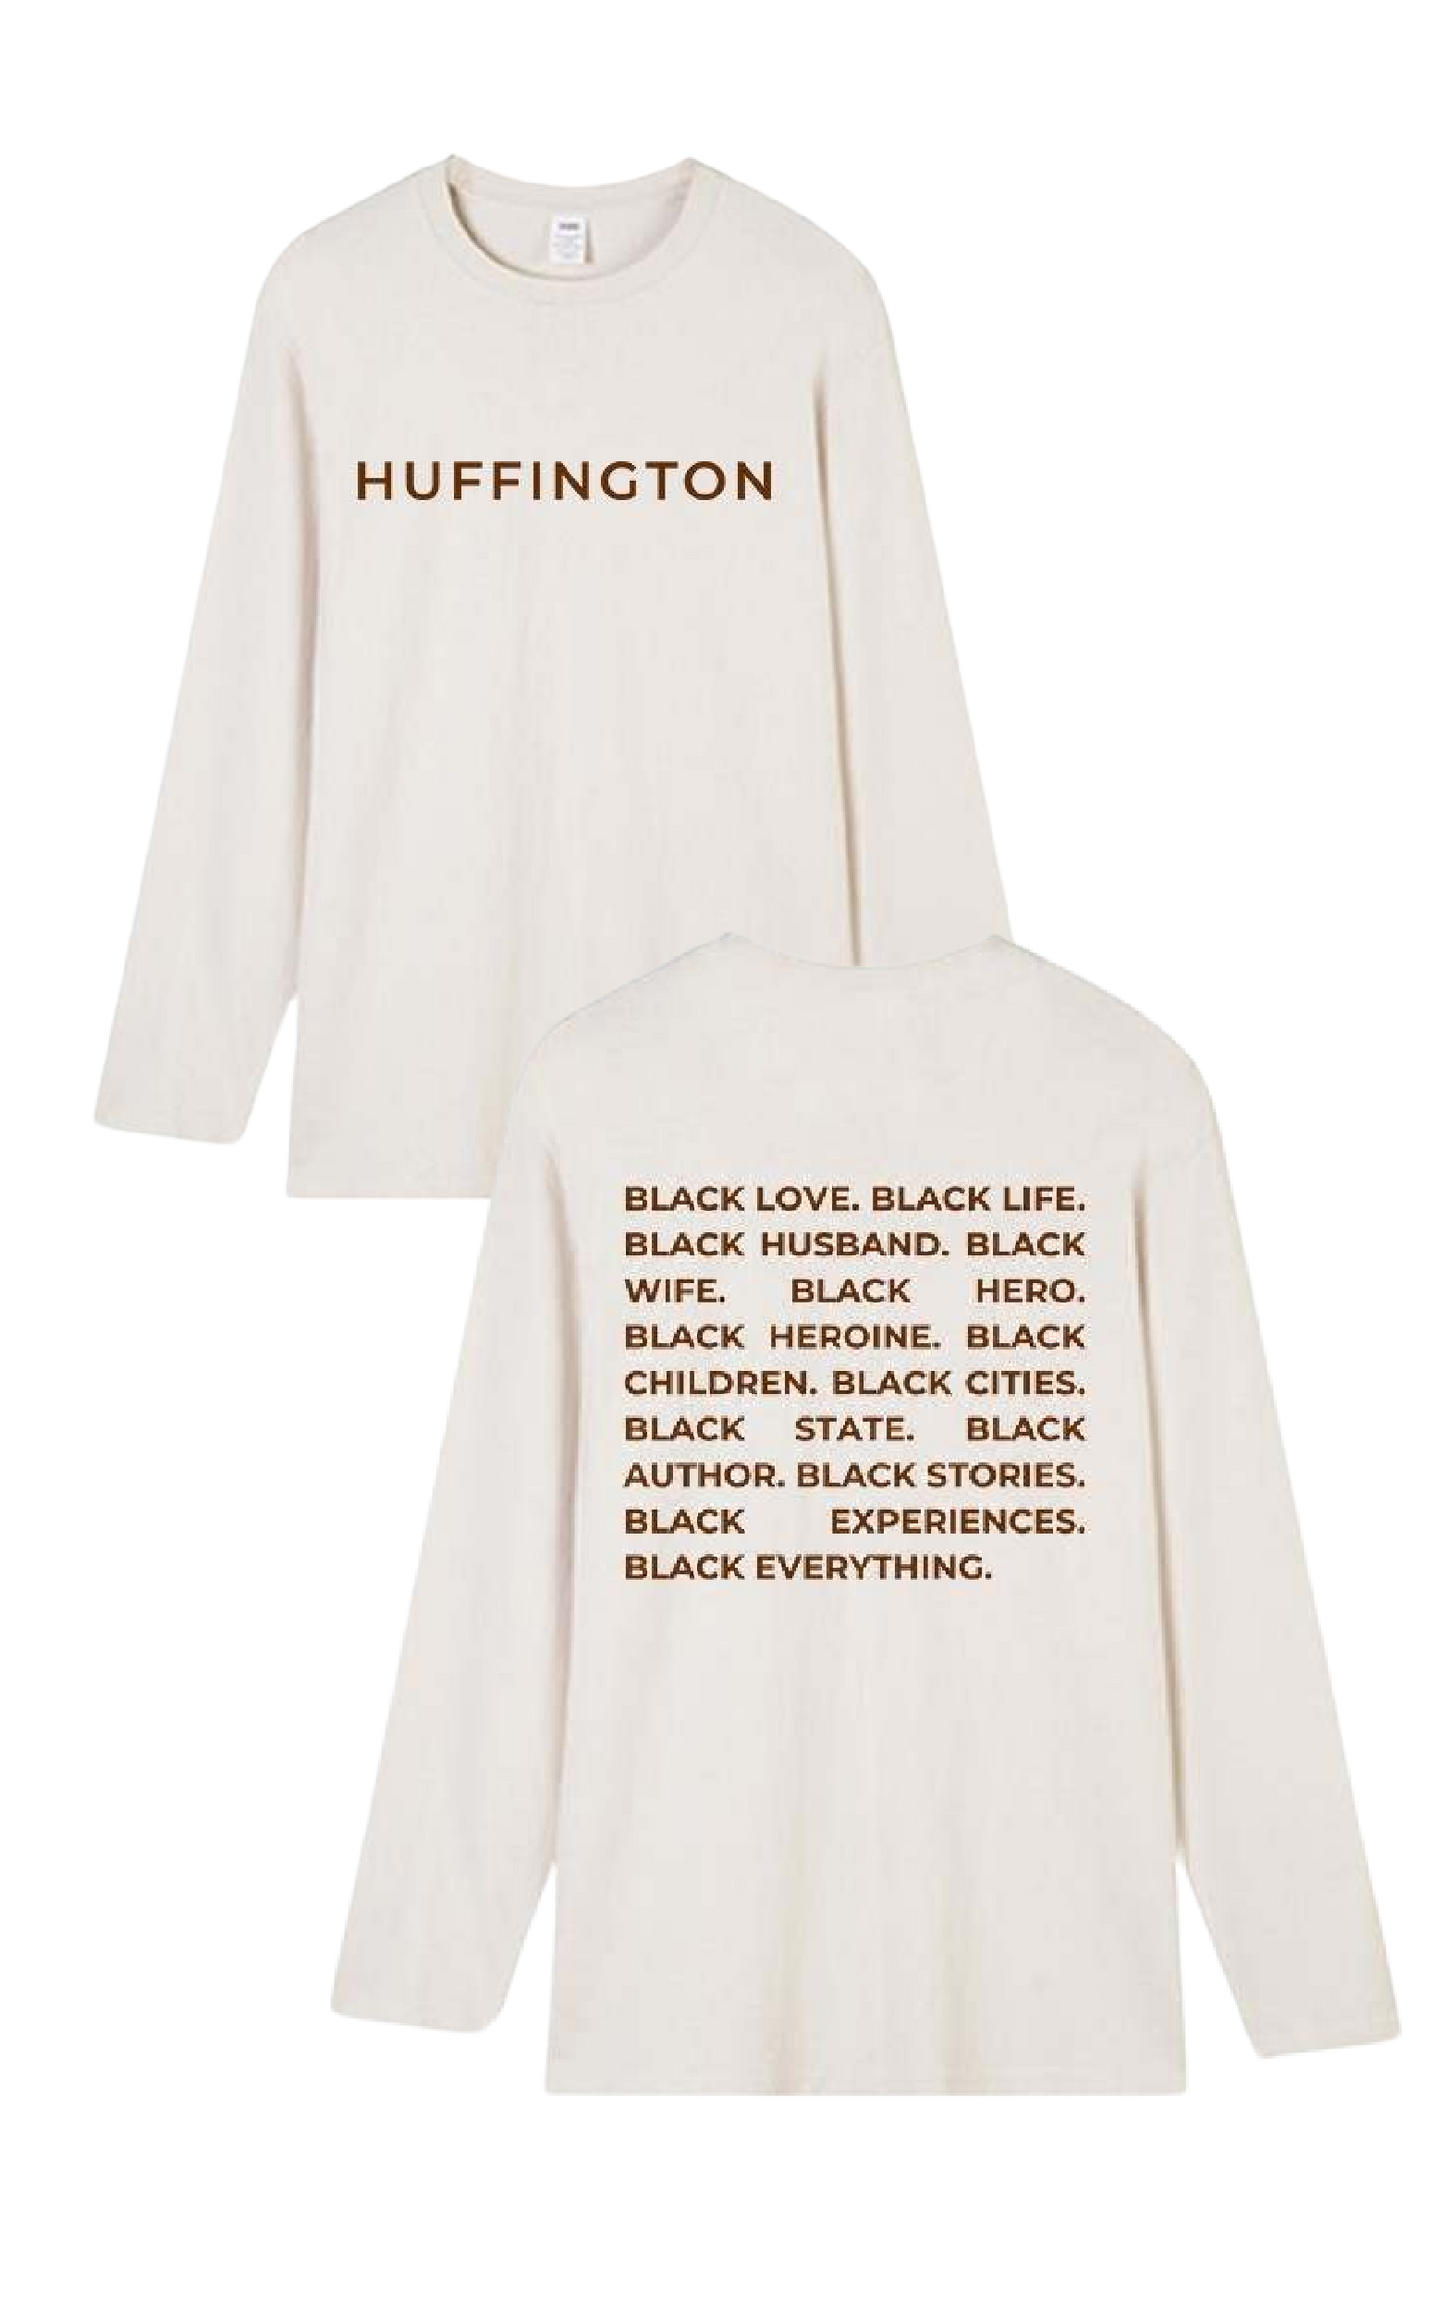 black everything shirt